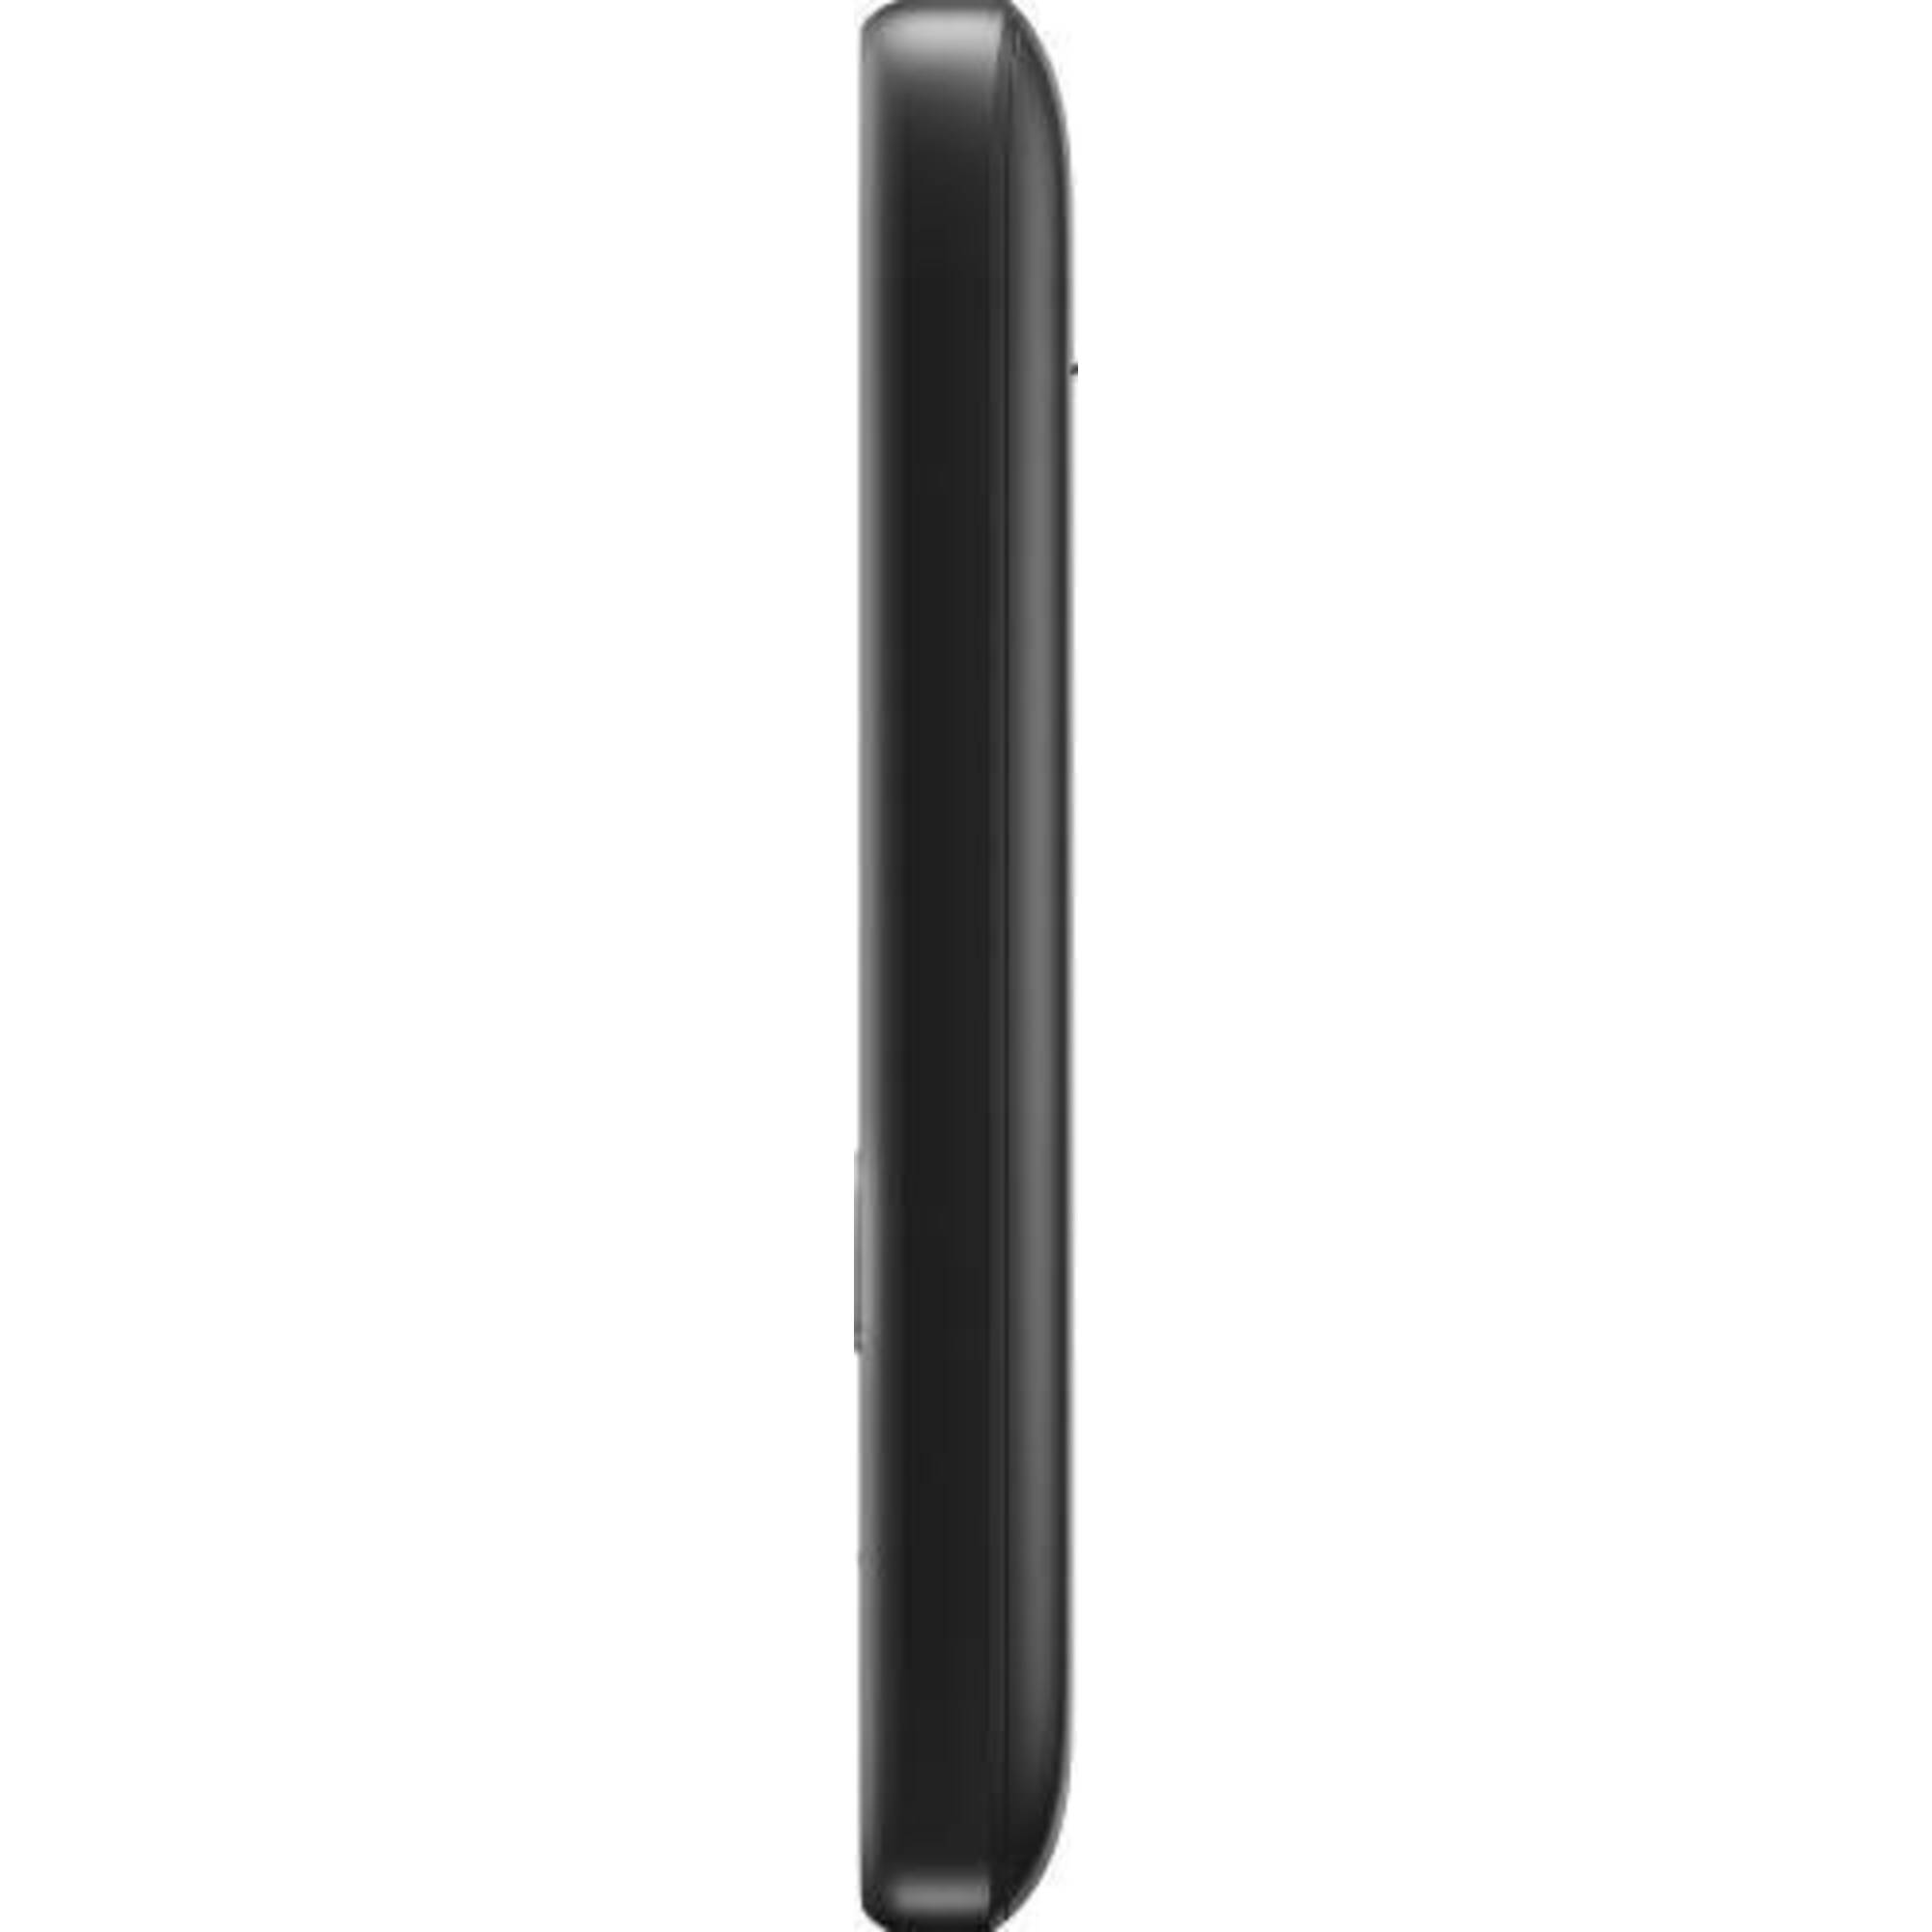 Nokia 225 4G TA-1282 GSM Unlocked Phone, Black - image 4 of 4